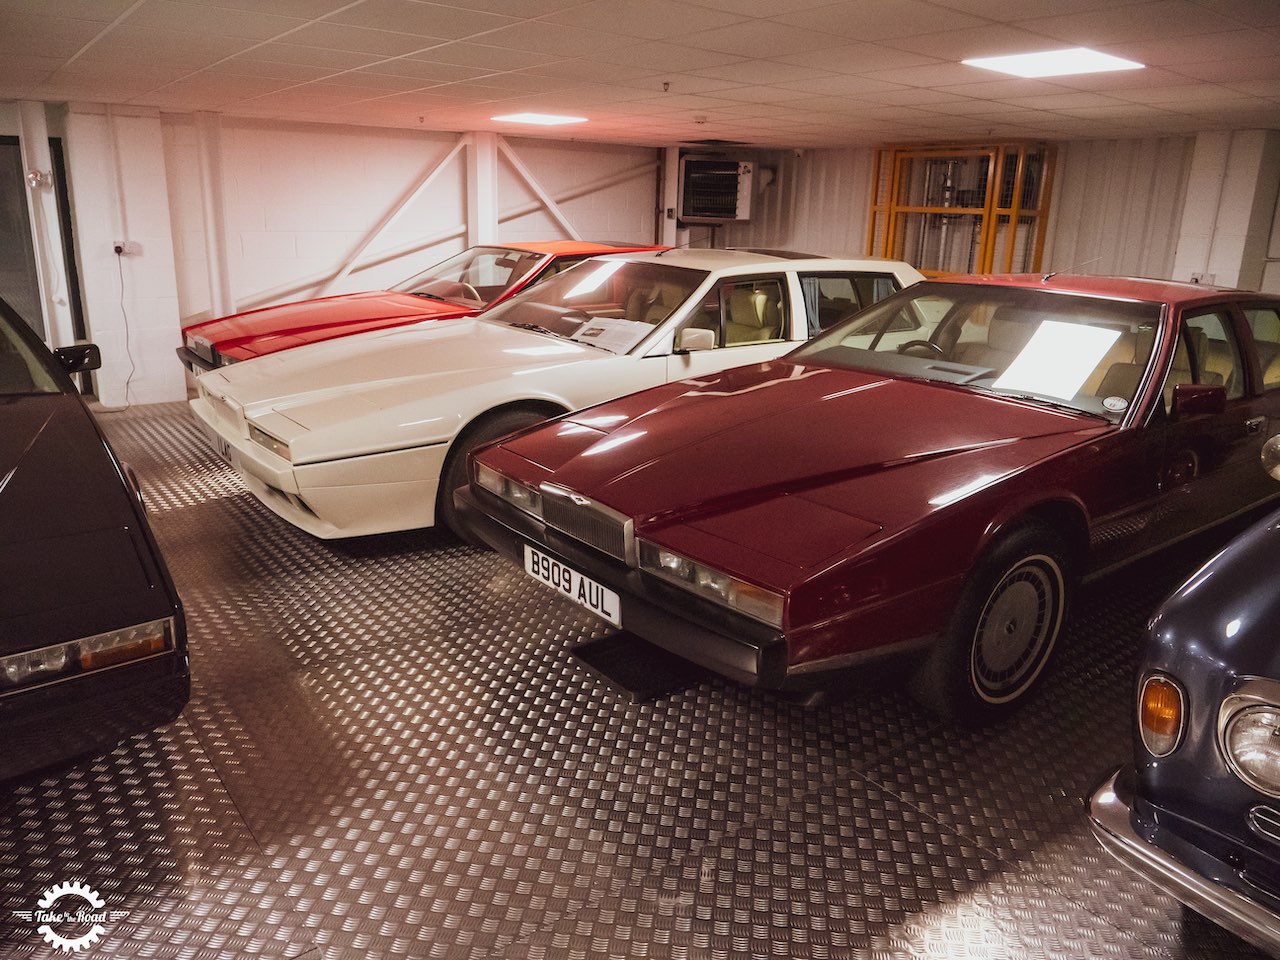 Studio 434 and the Aston Martin Lagonda Wedge